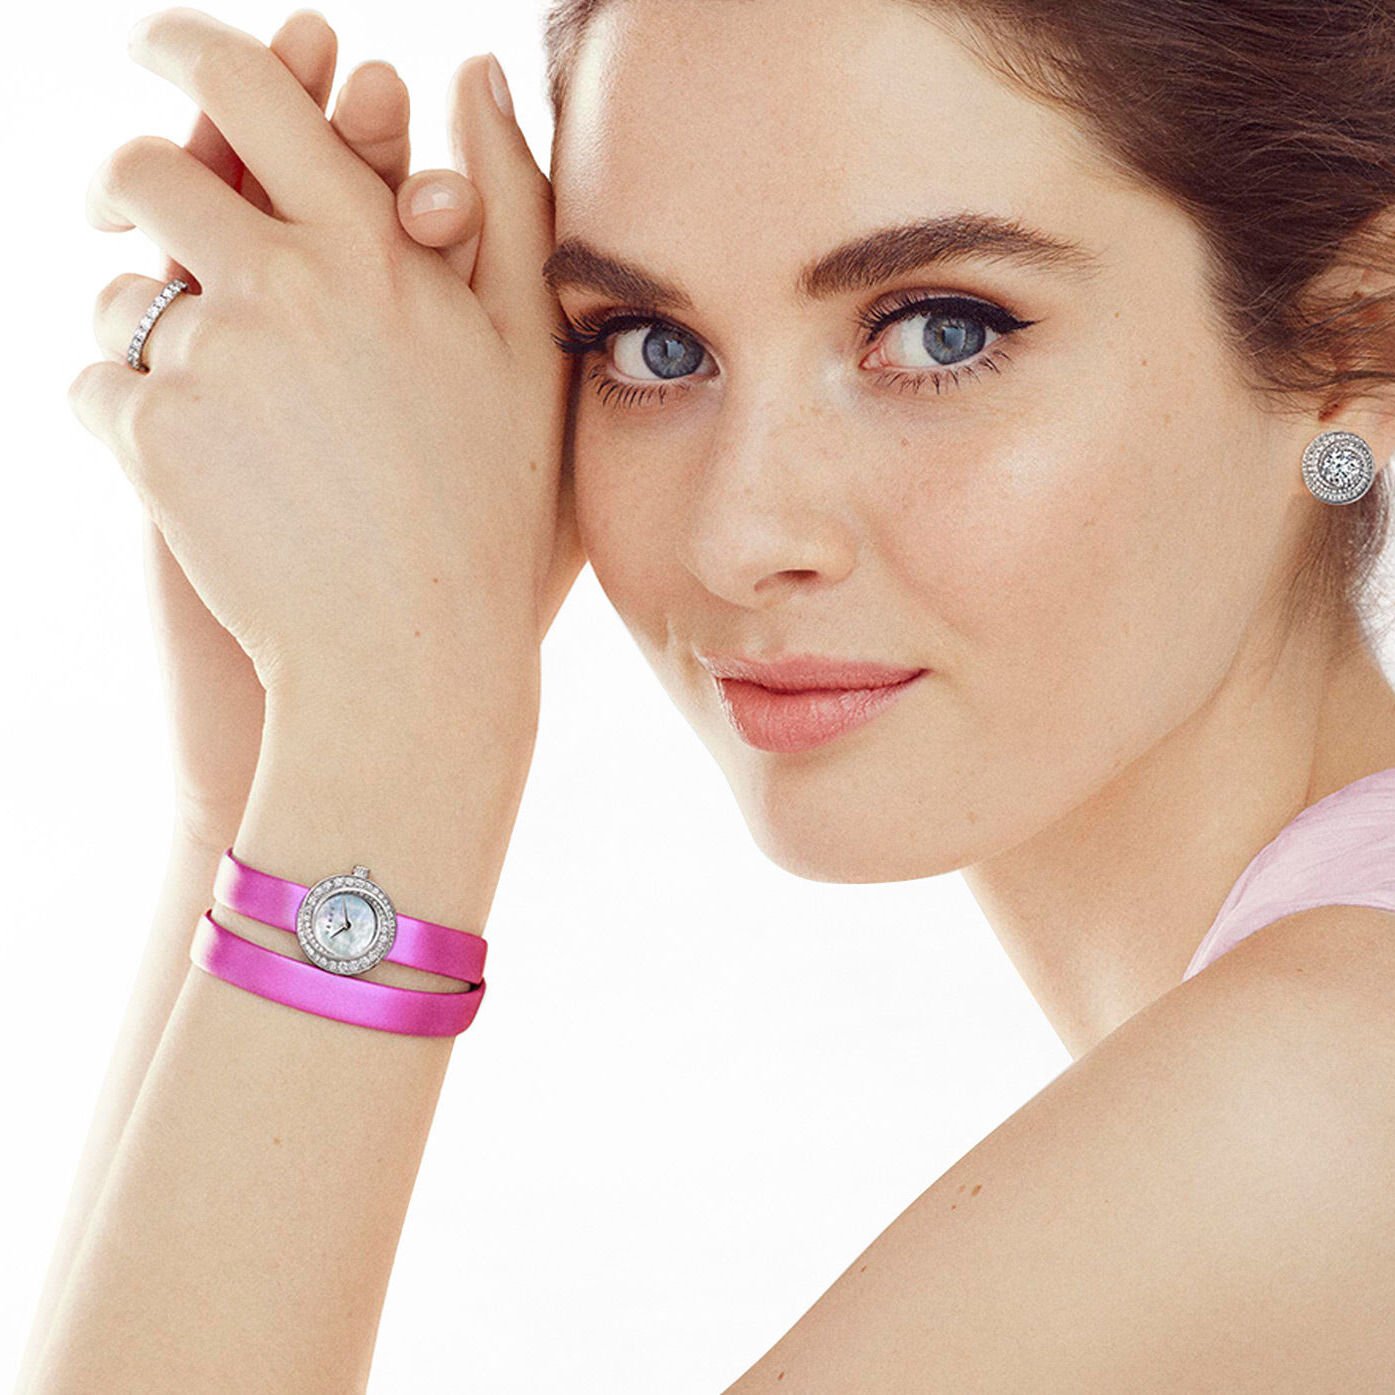 Model wears a Graff Spiral watch with a pink satin strap